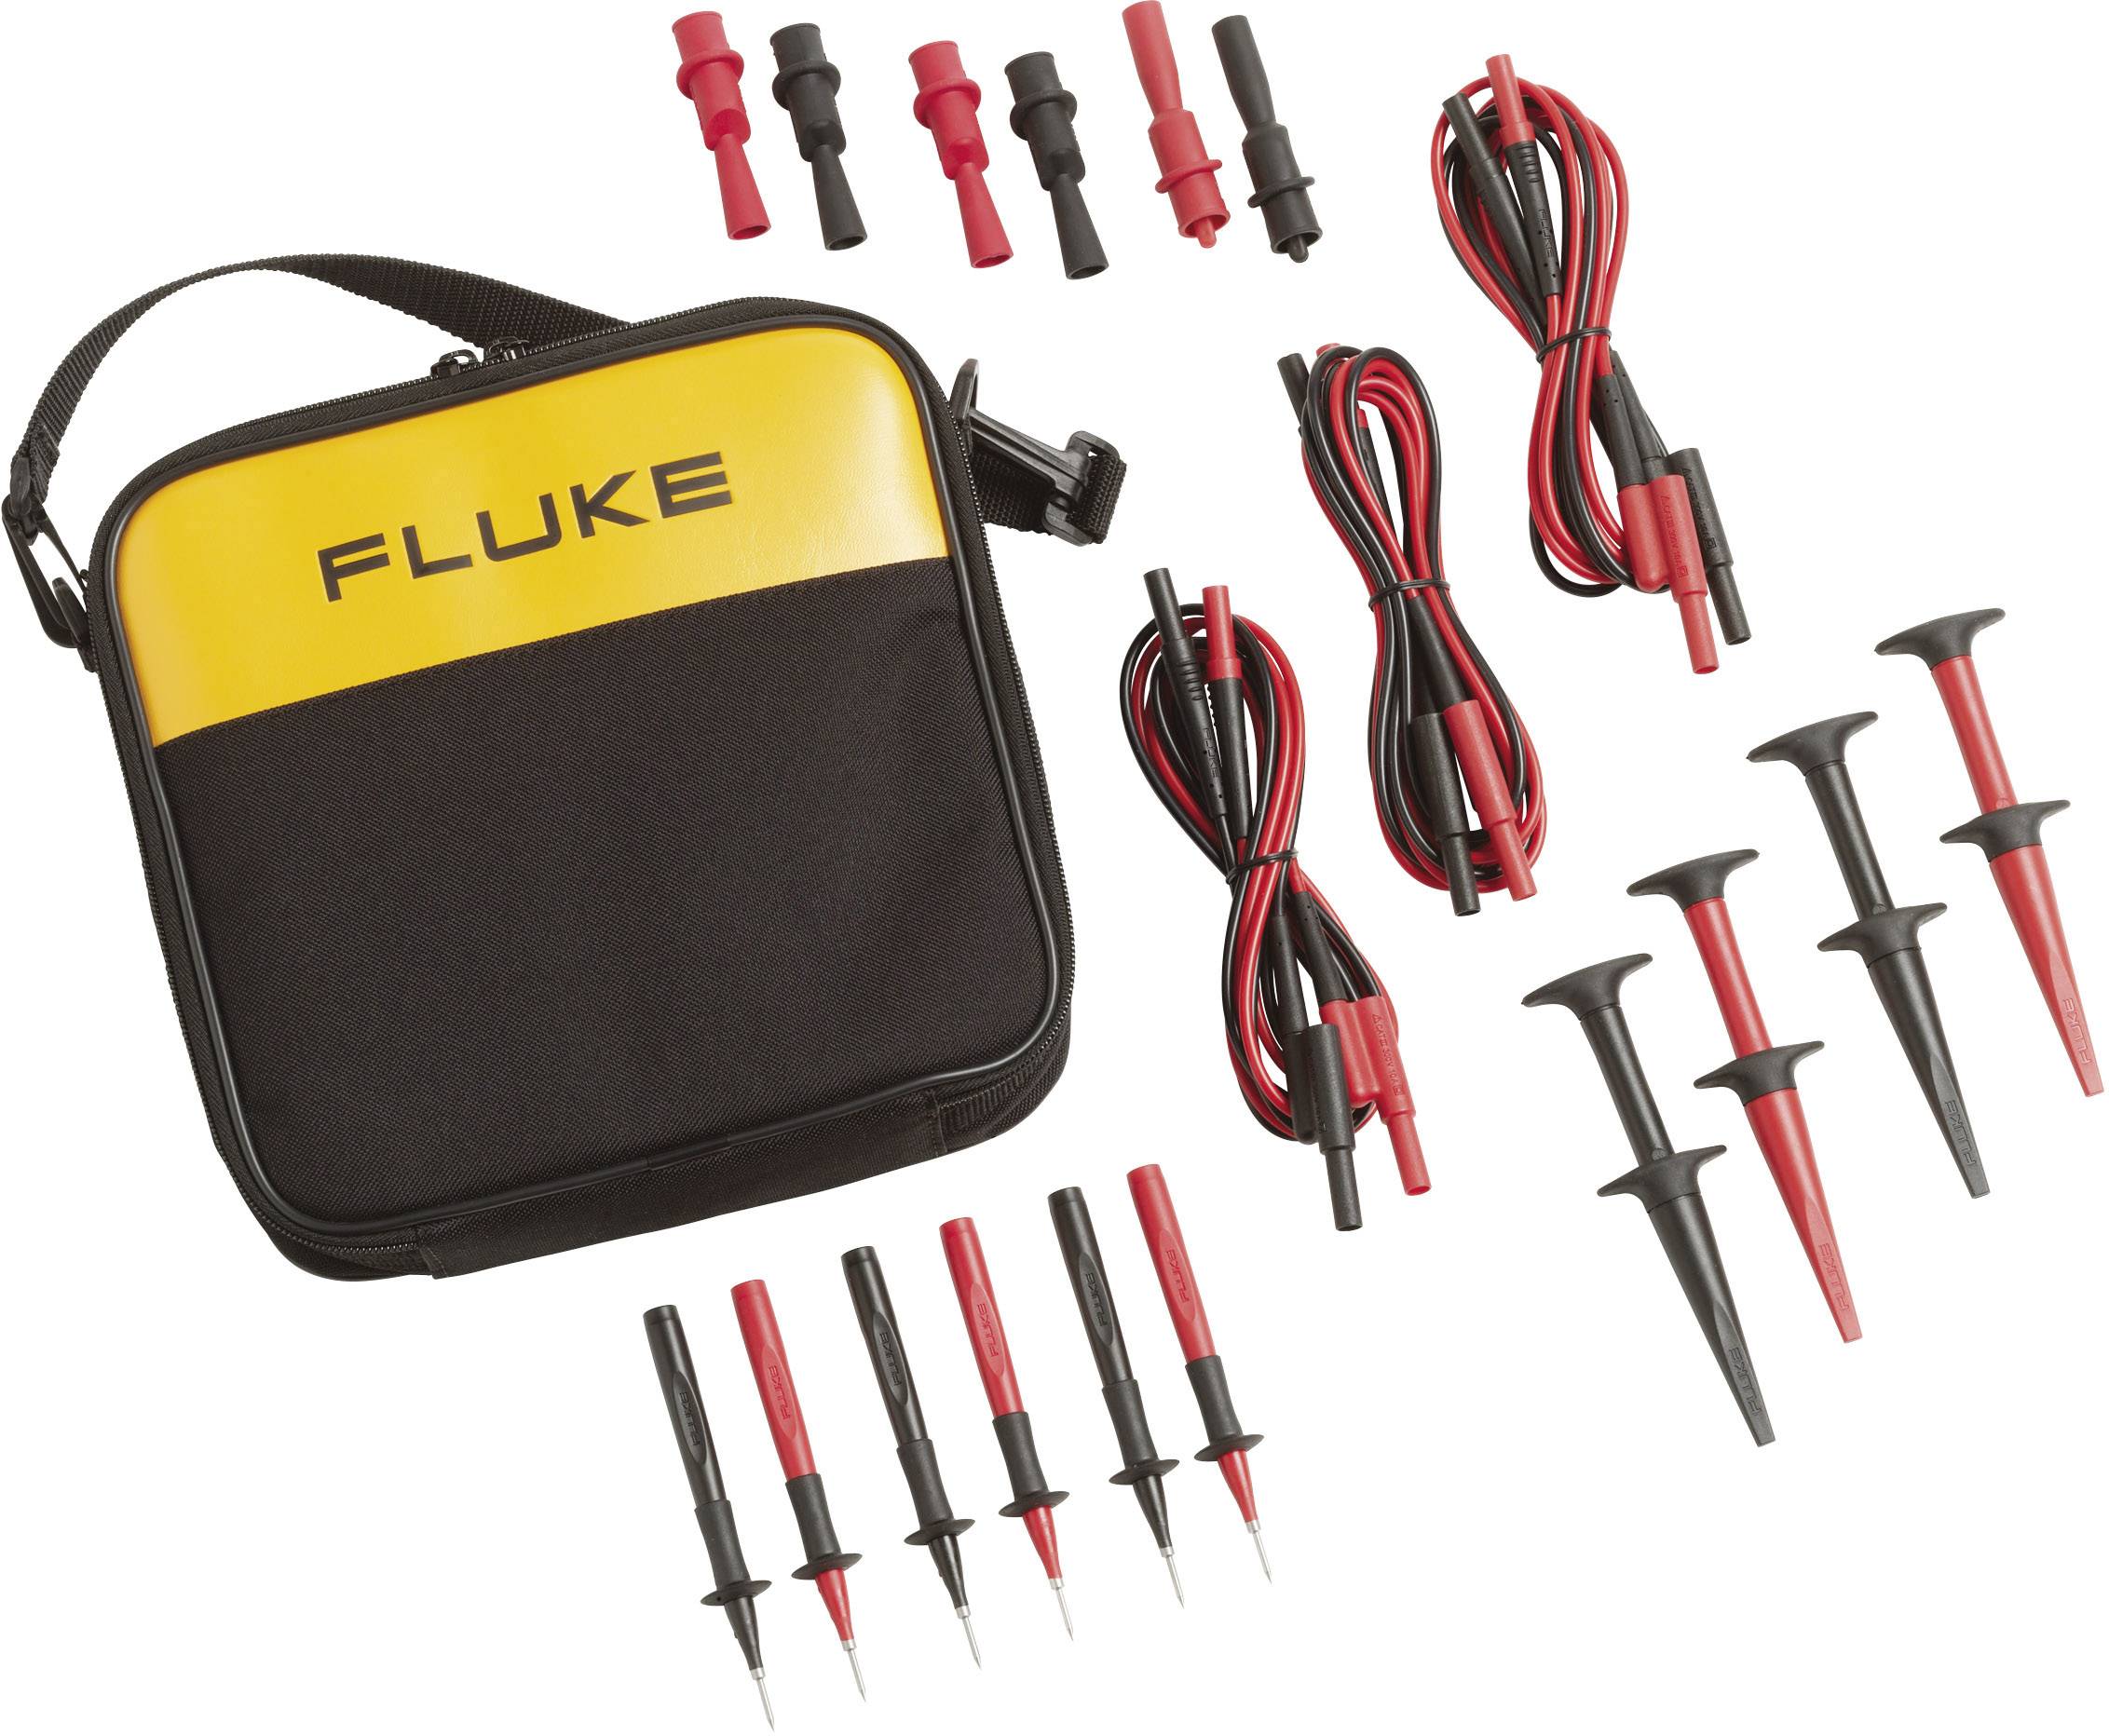 FLUKE Sicherheits-Messleitungs-Set [ Lamellenstecker 4 mm, Prüfspitze, Krokoklemmen, Abgreifklemmen